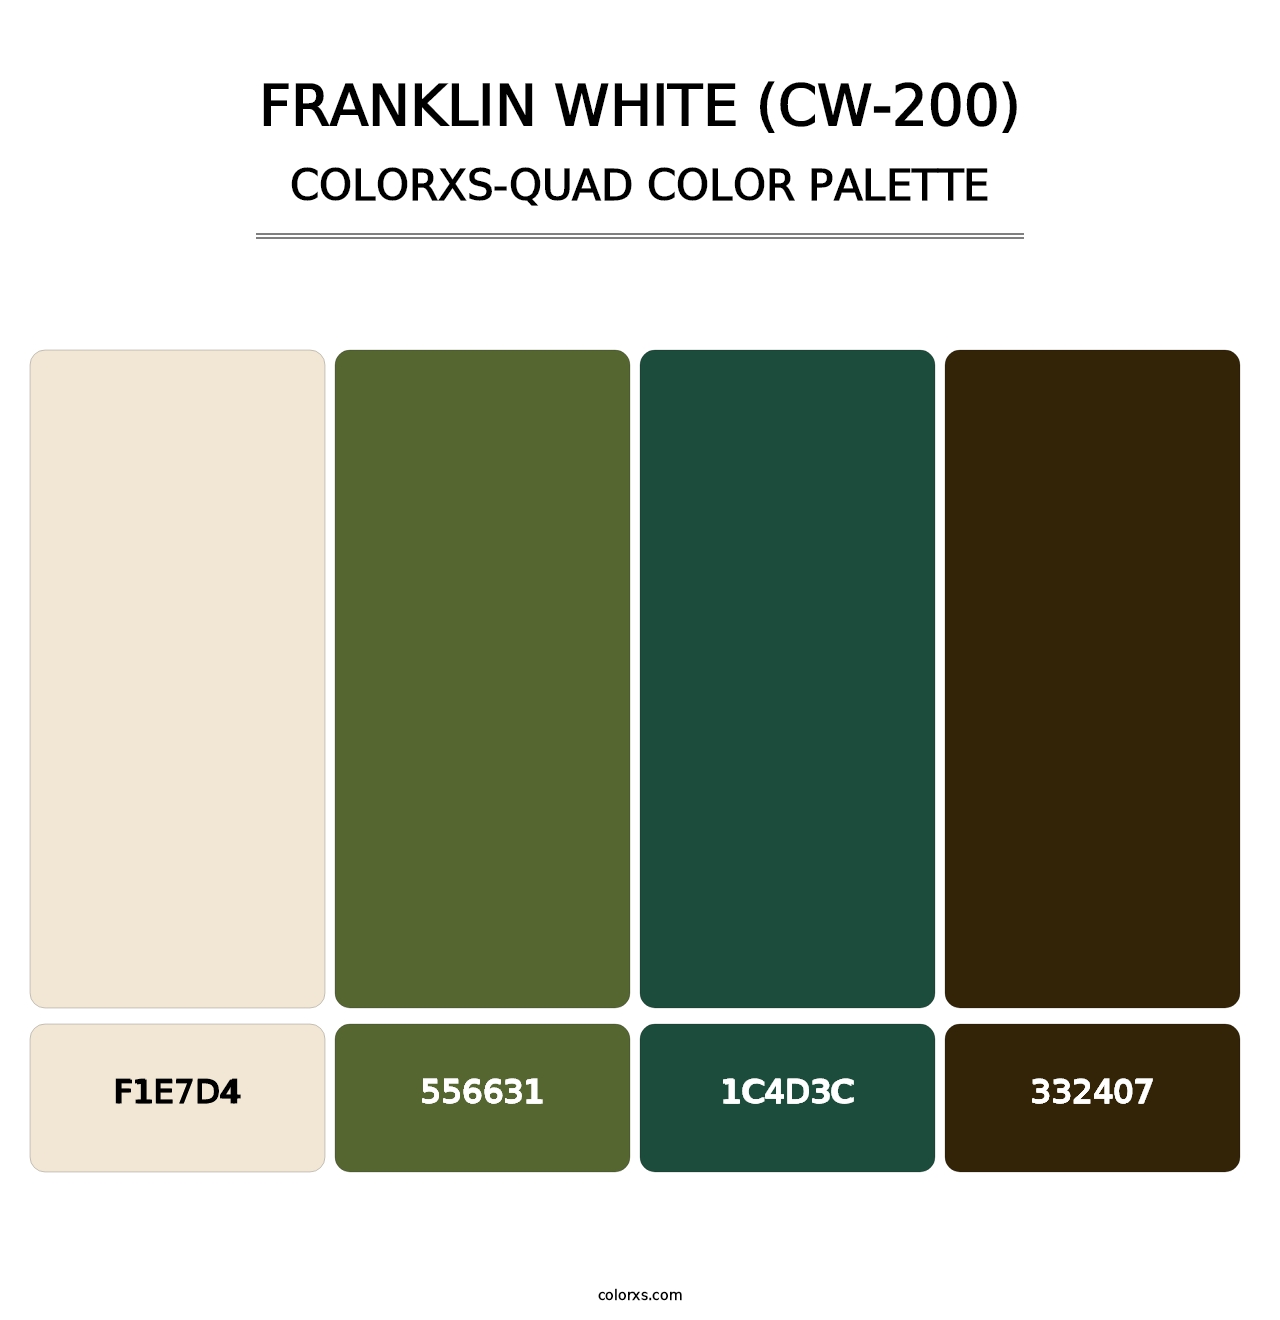 Franklin White (CW-200) - Colorxs Quad Palette